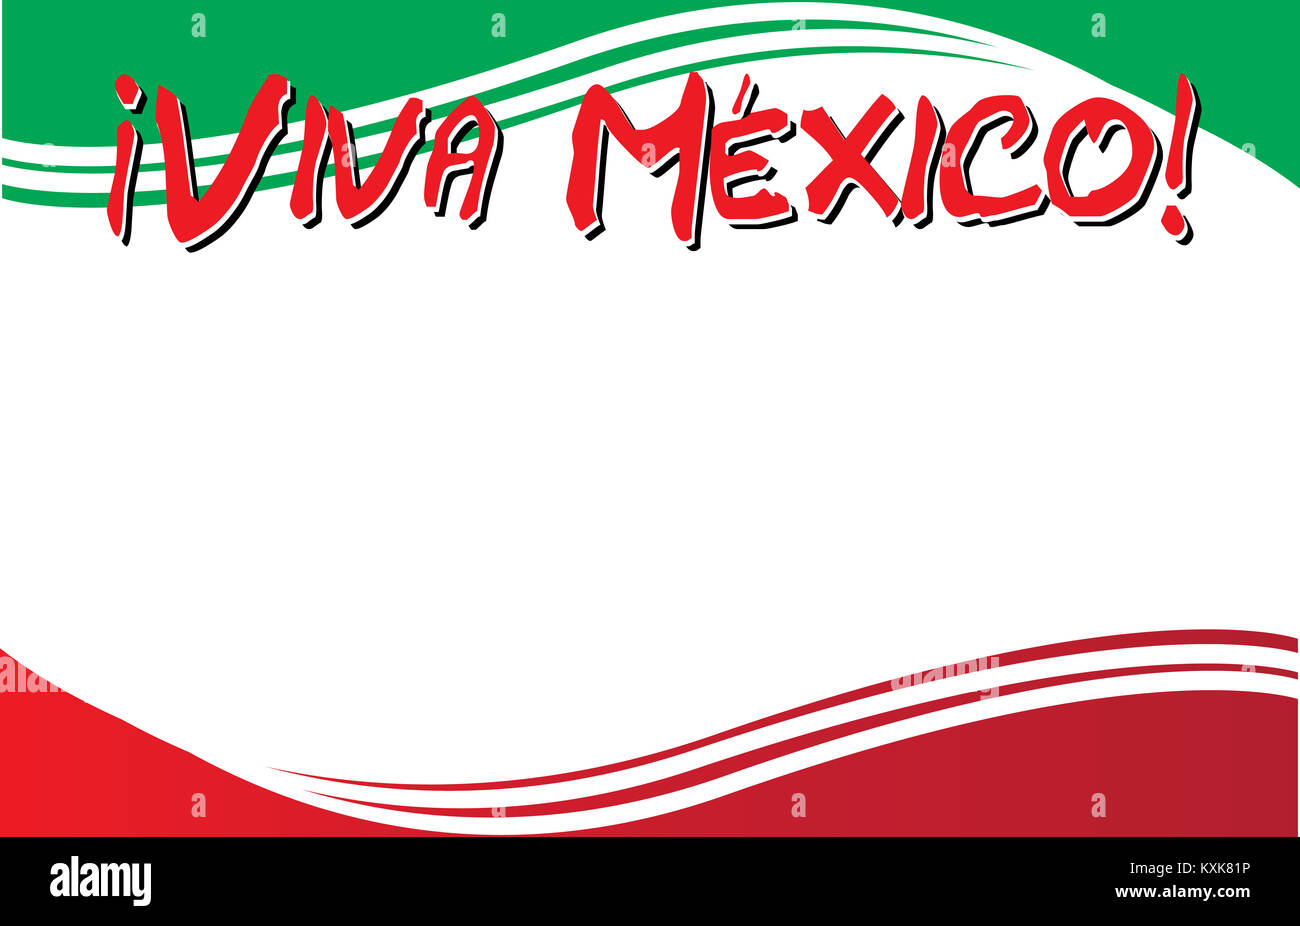 Viva Mexico with Mexican Flag Border Postcard Stock Photo